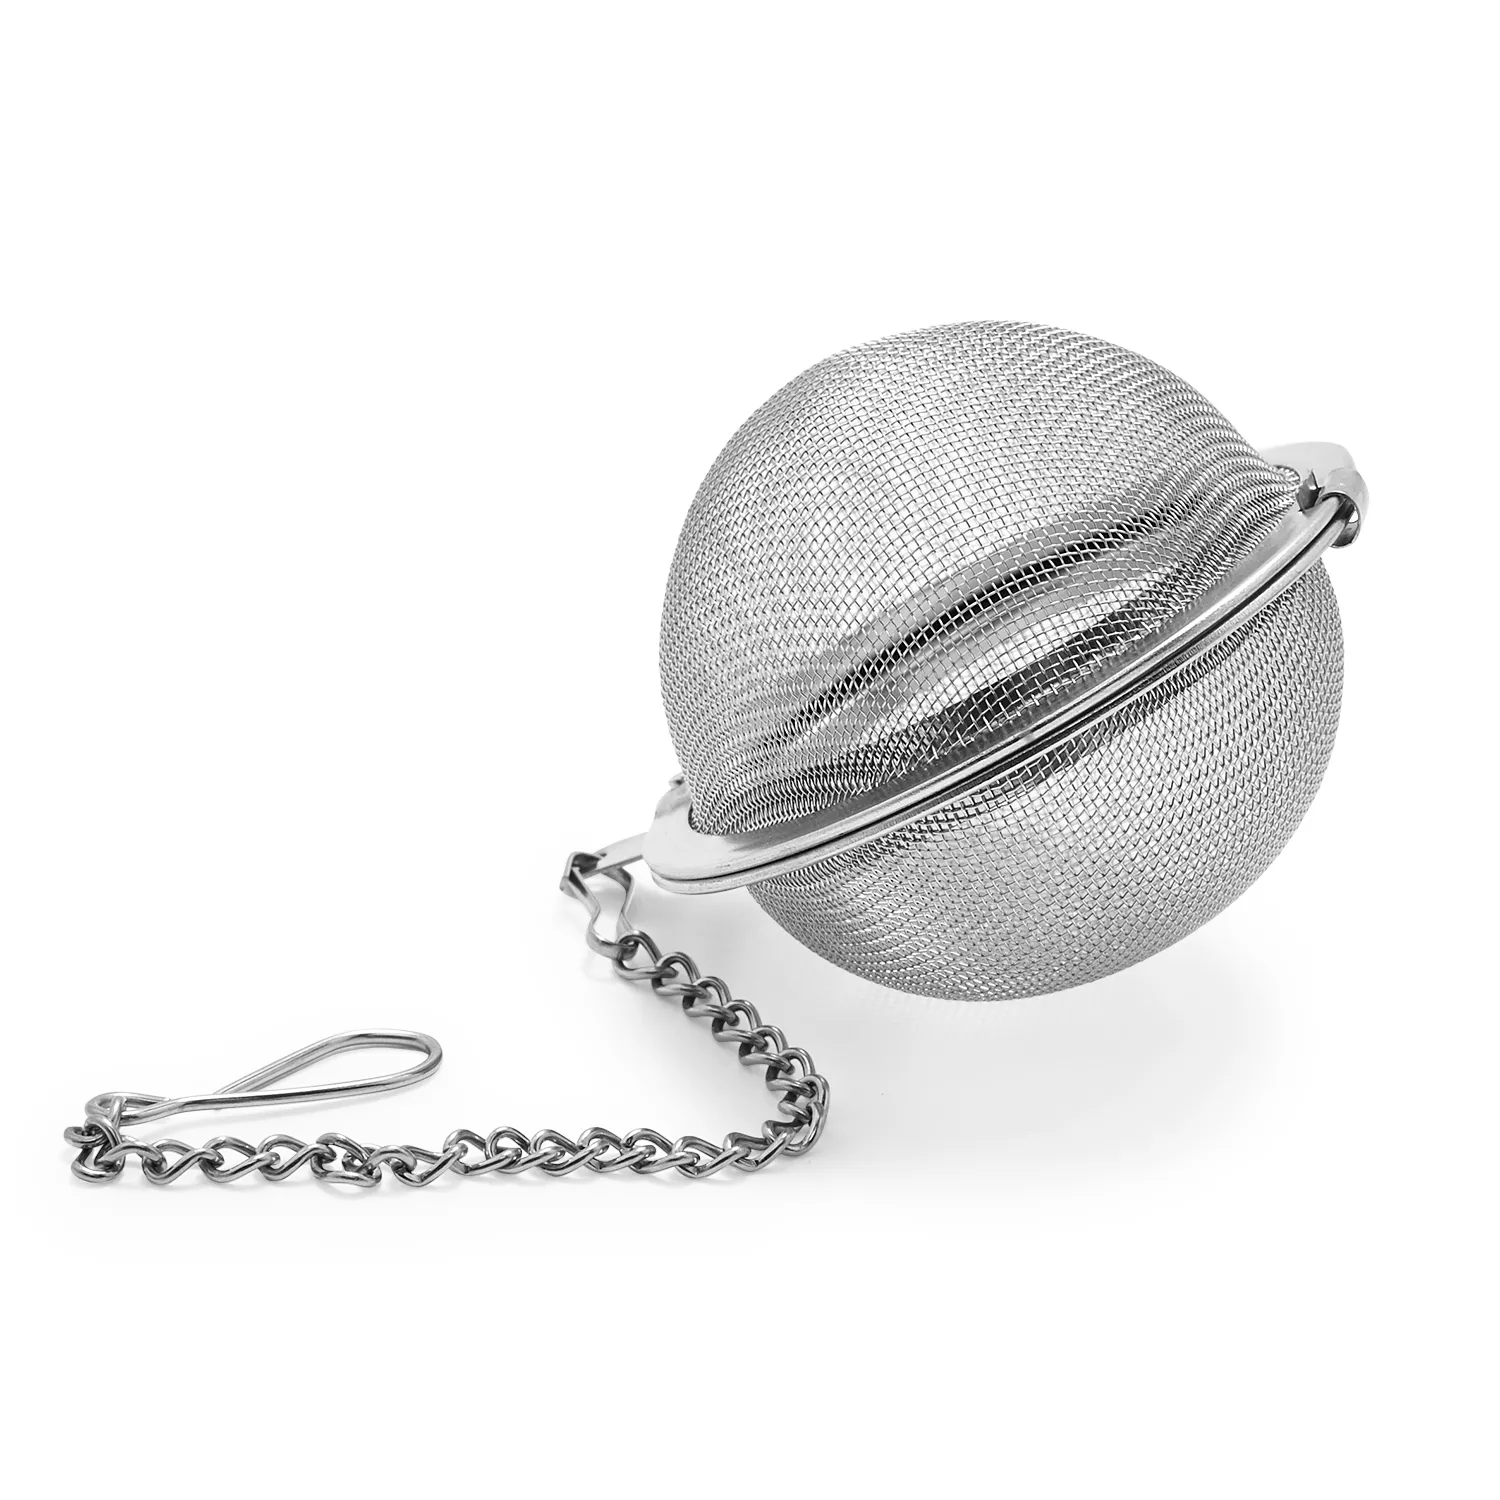 OXO Good Grips Stainless Steel Twisting Tea Ball